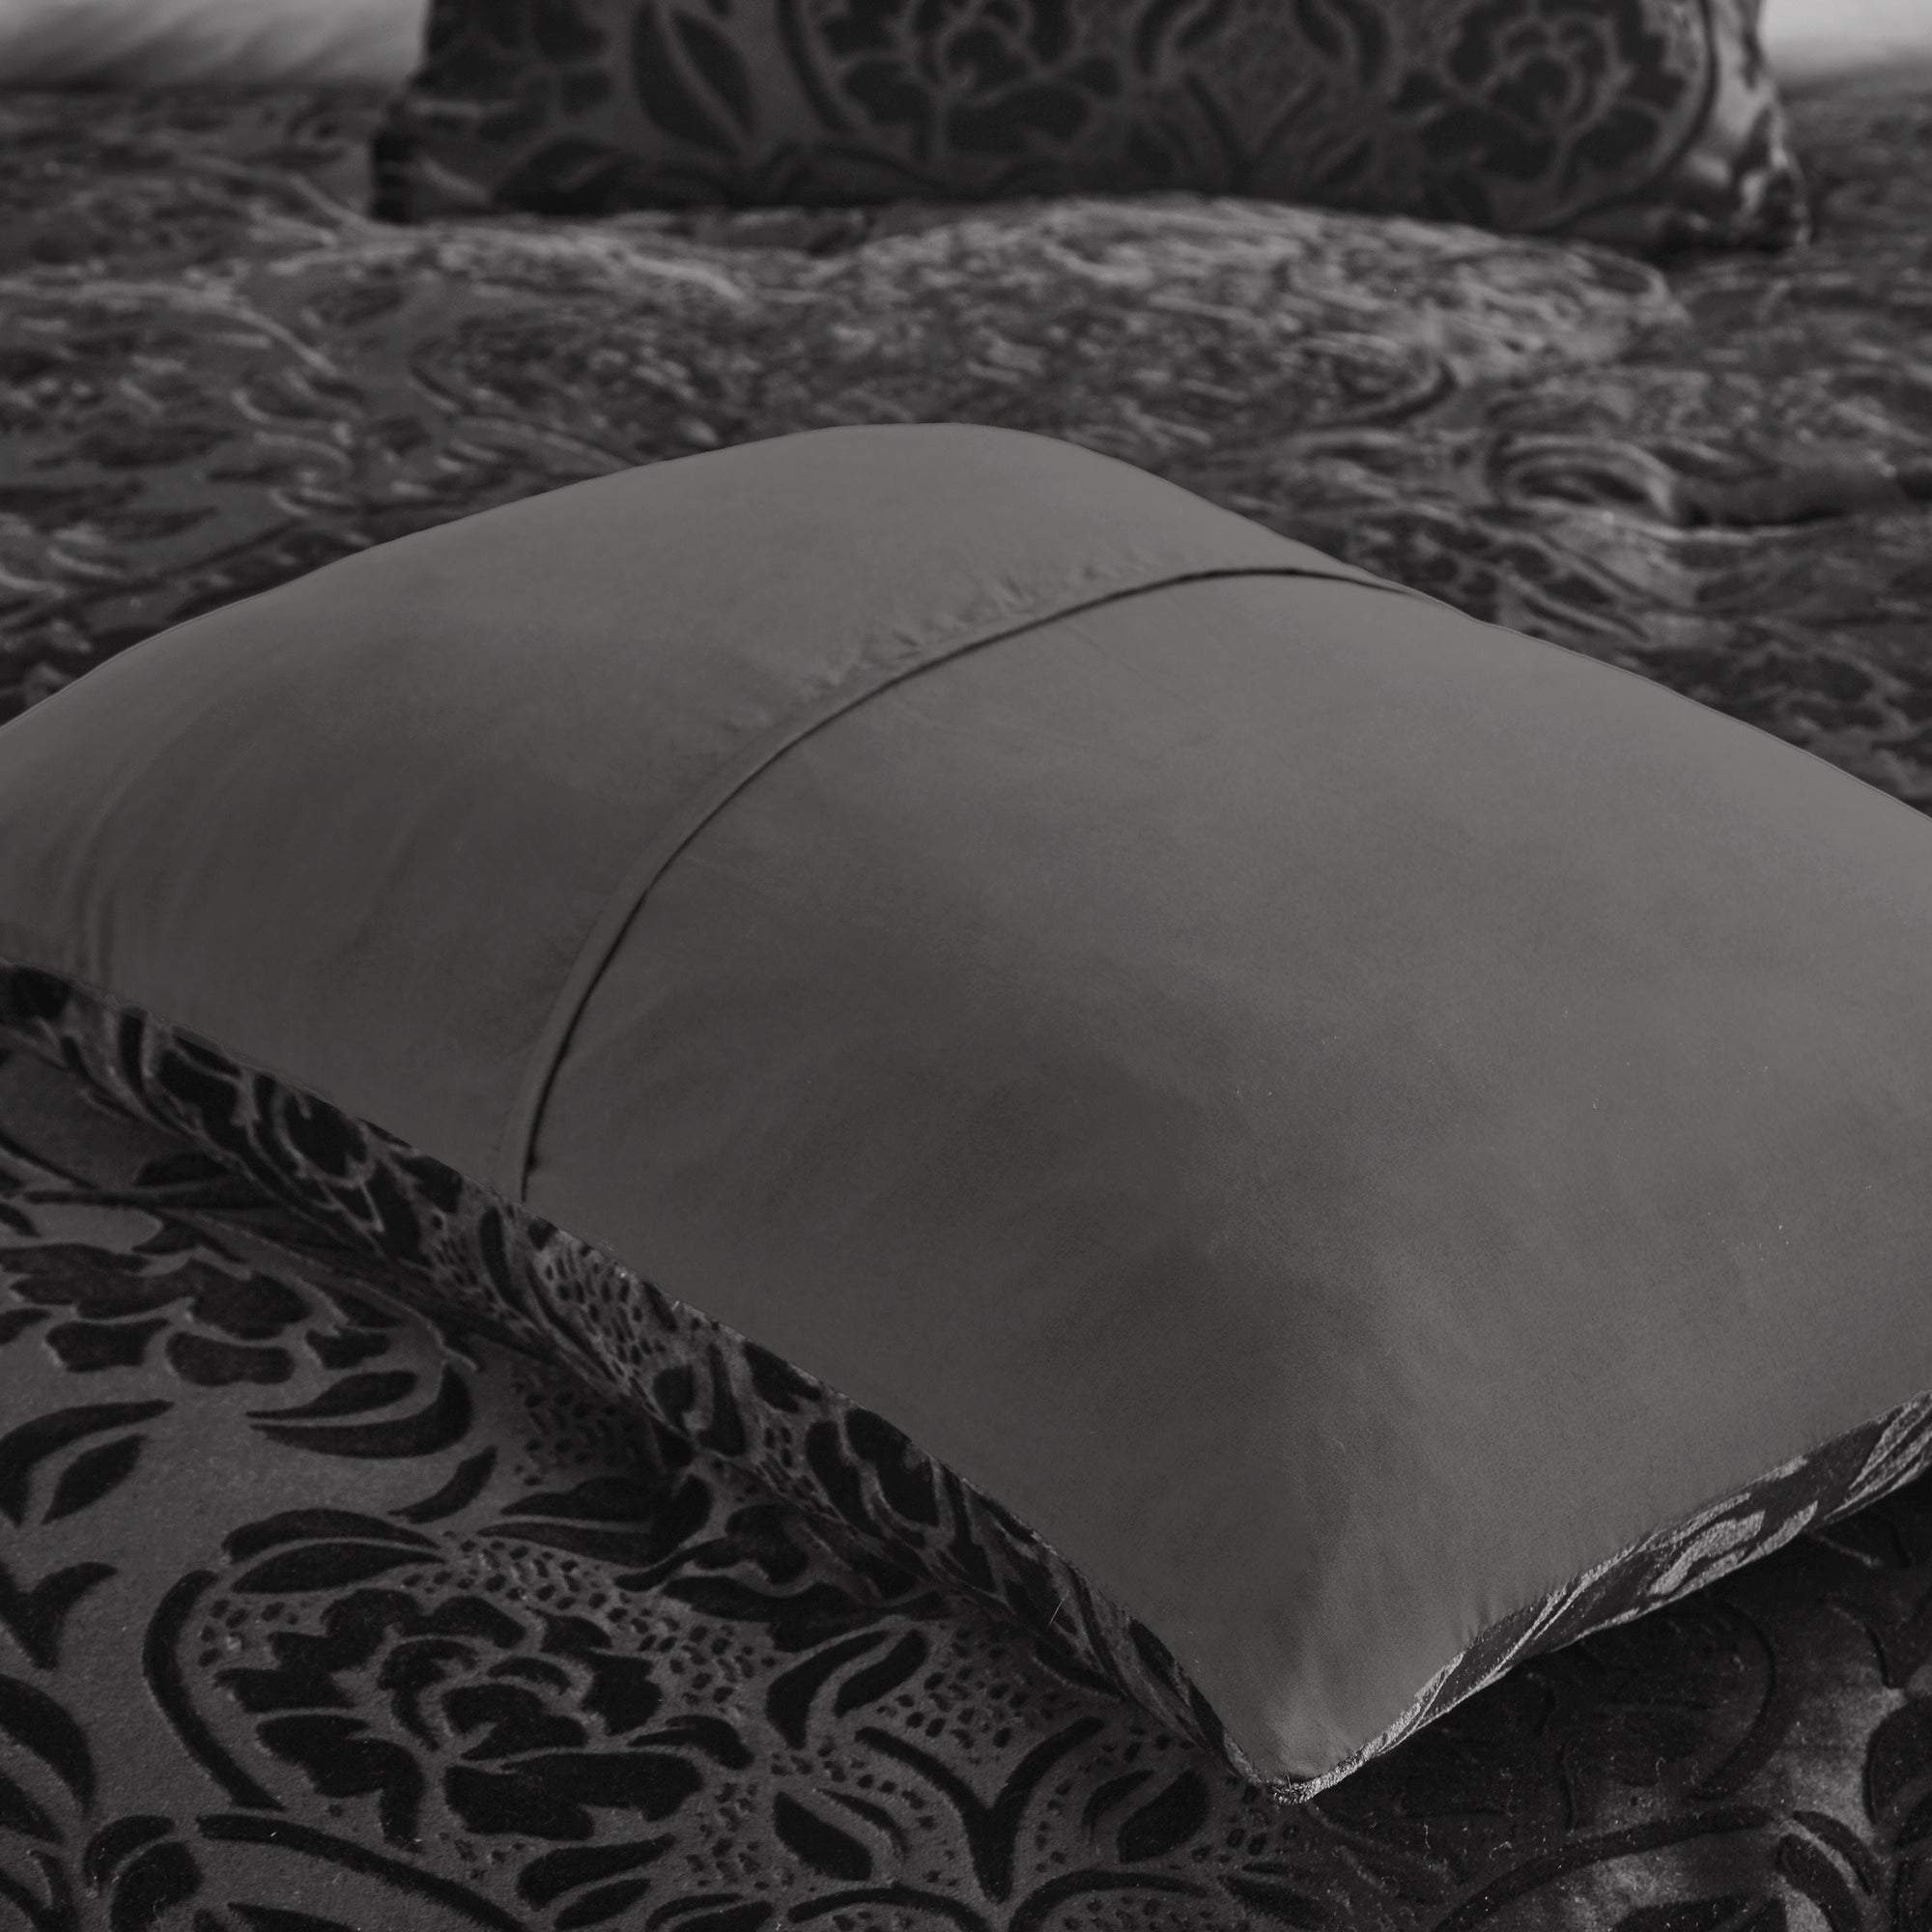 Irene Grey 5-Piece Comforter Set Comforter Sets By Olliix/JLA HOME (E & E Co., Ltd)